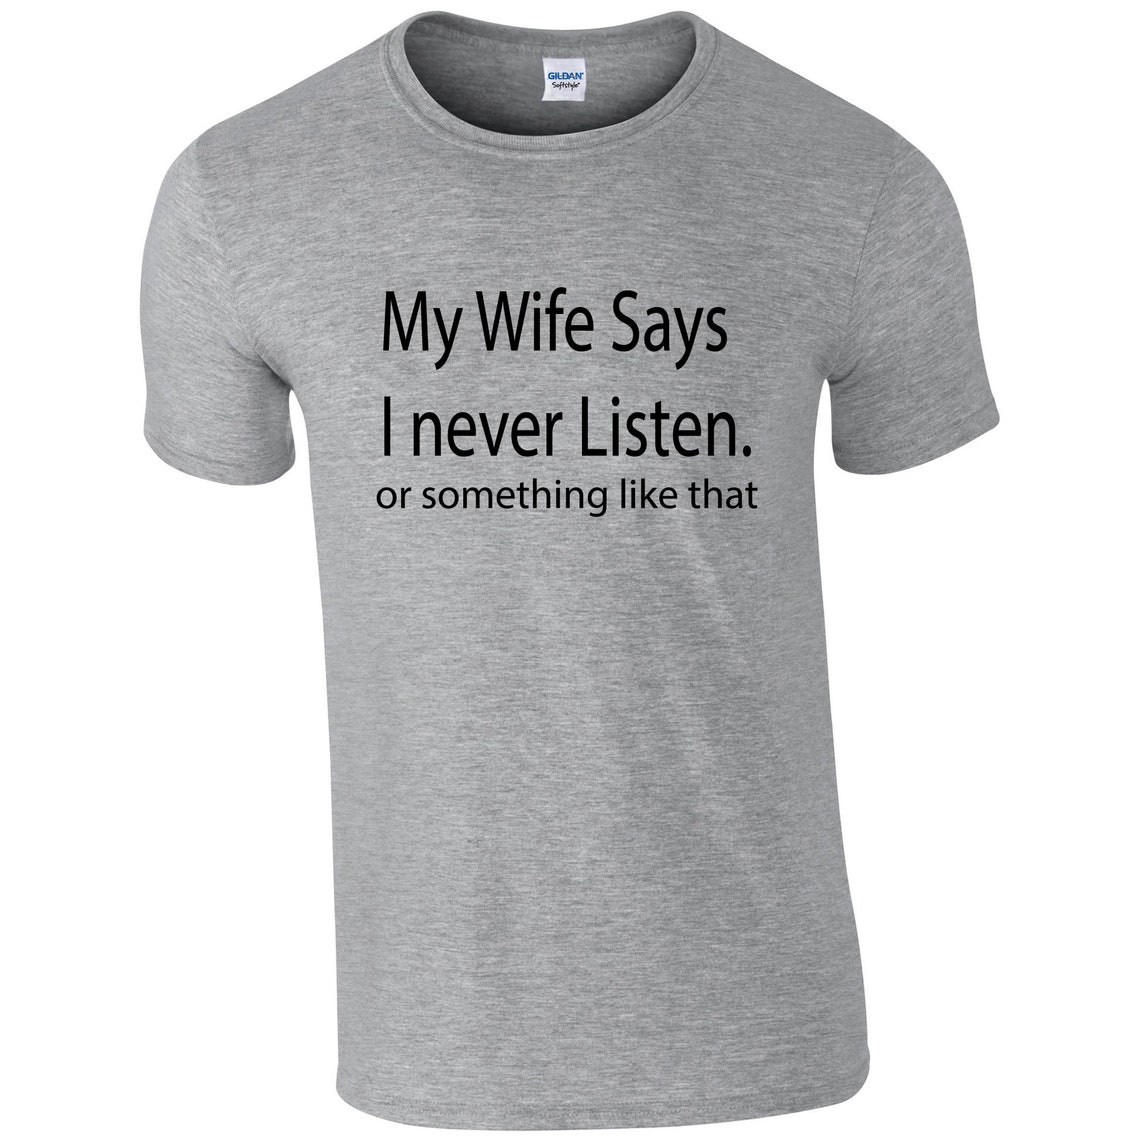 My Wife Says I Never Listen. Funny T shirt T-shirt Tshirt | Etsy